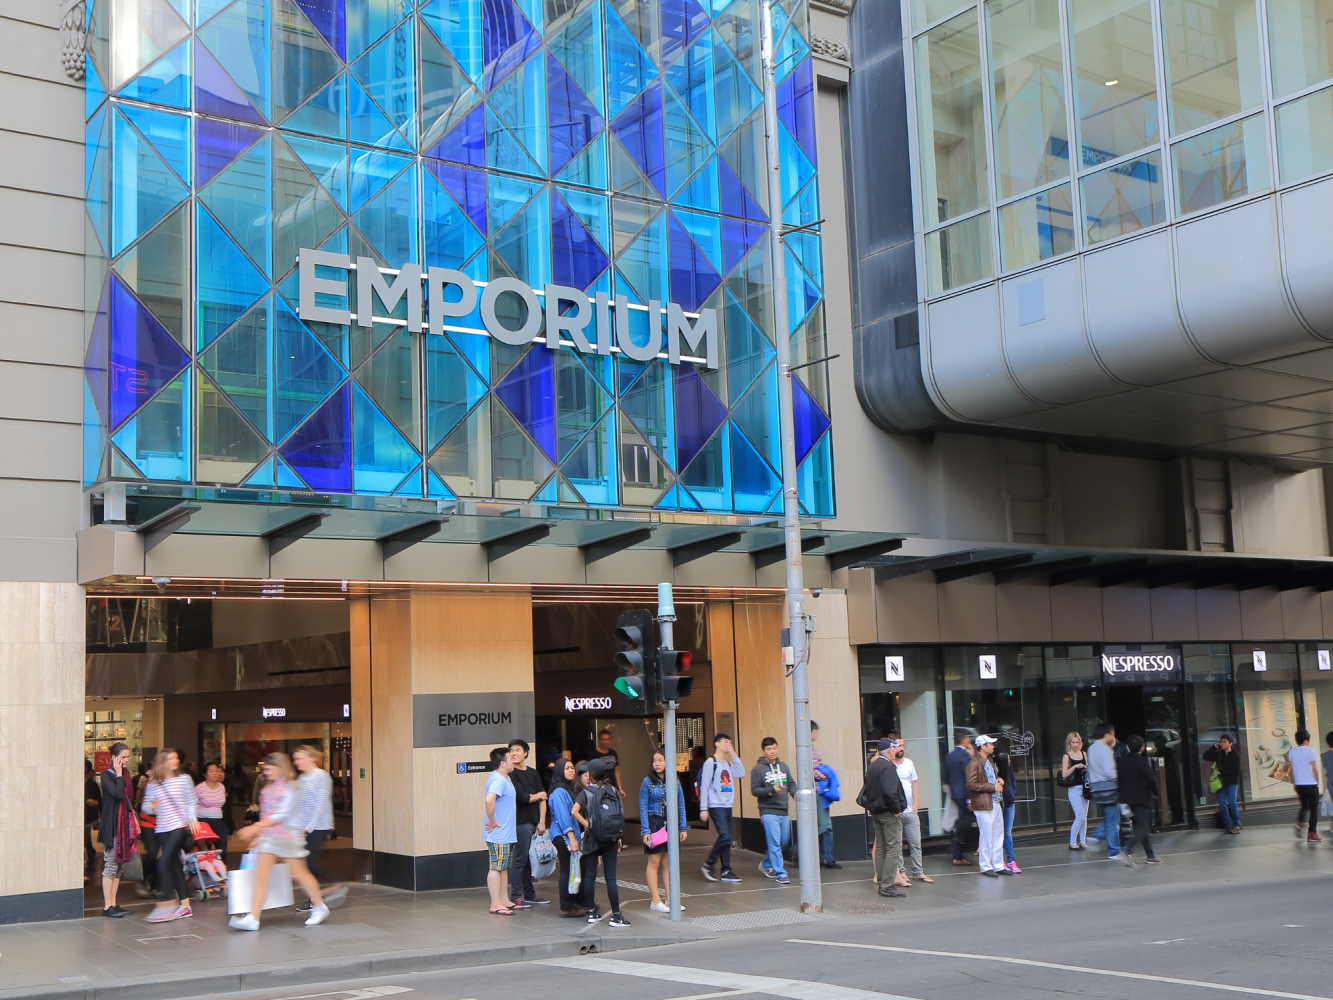 Melbourne Central Emporium